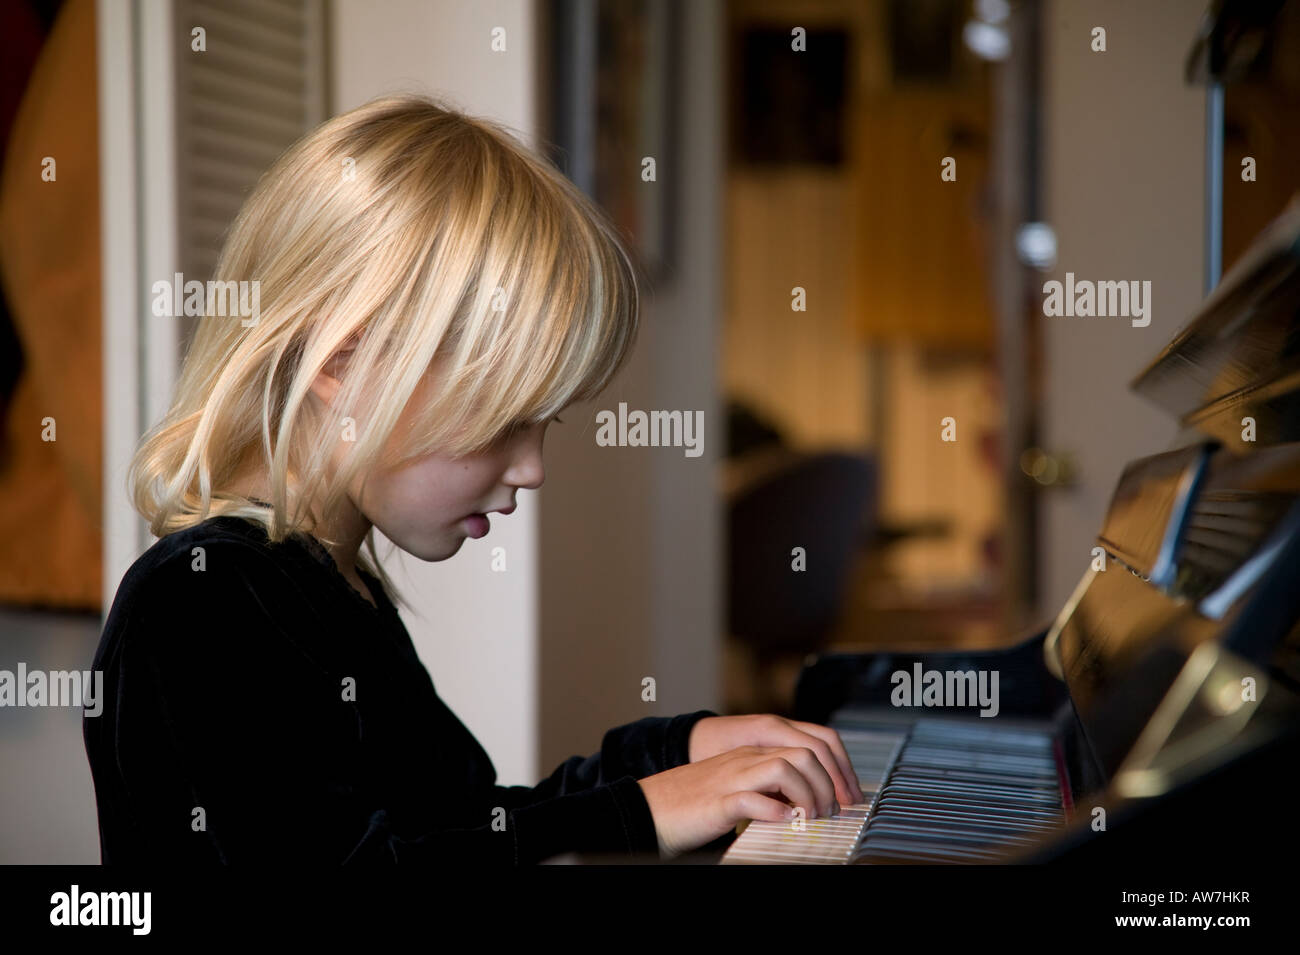 Girl playing piano Stock Photo